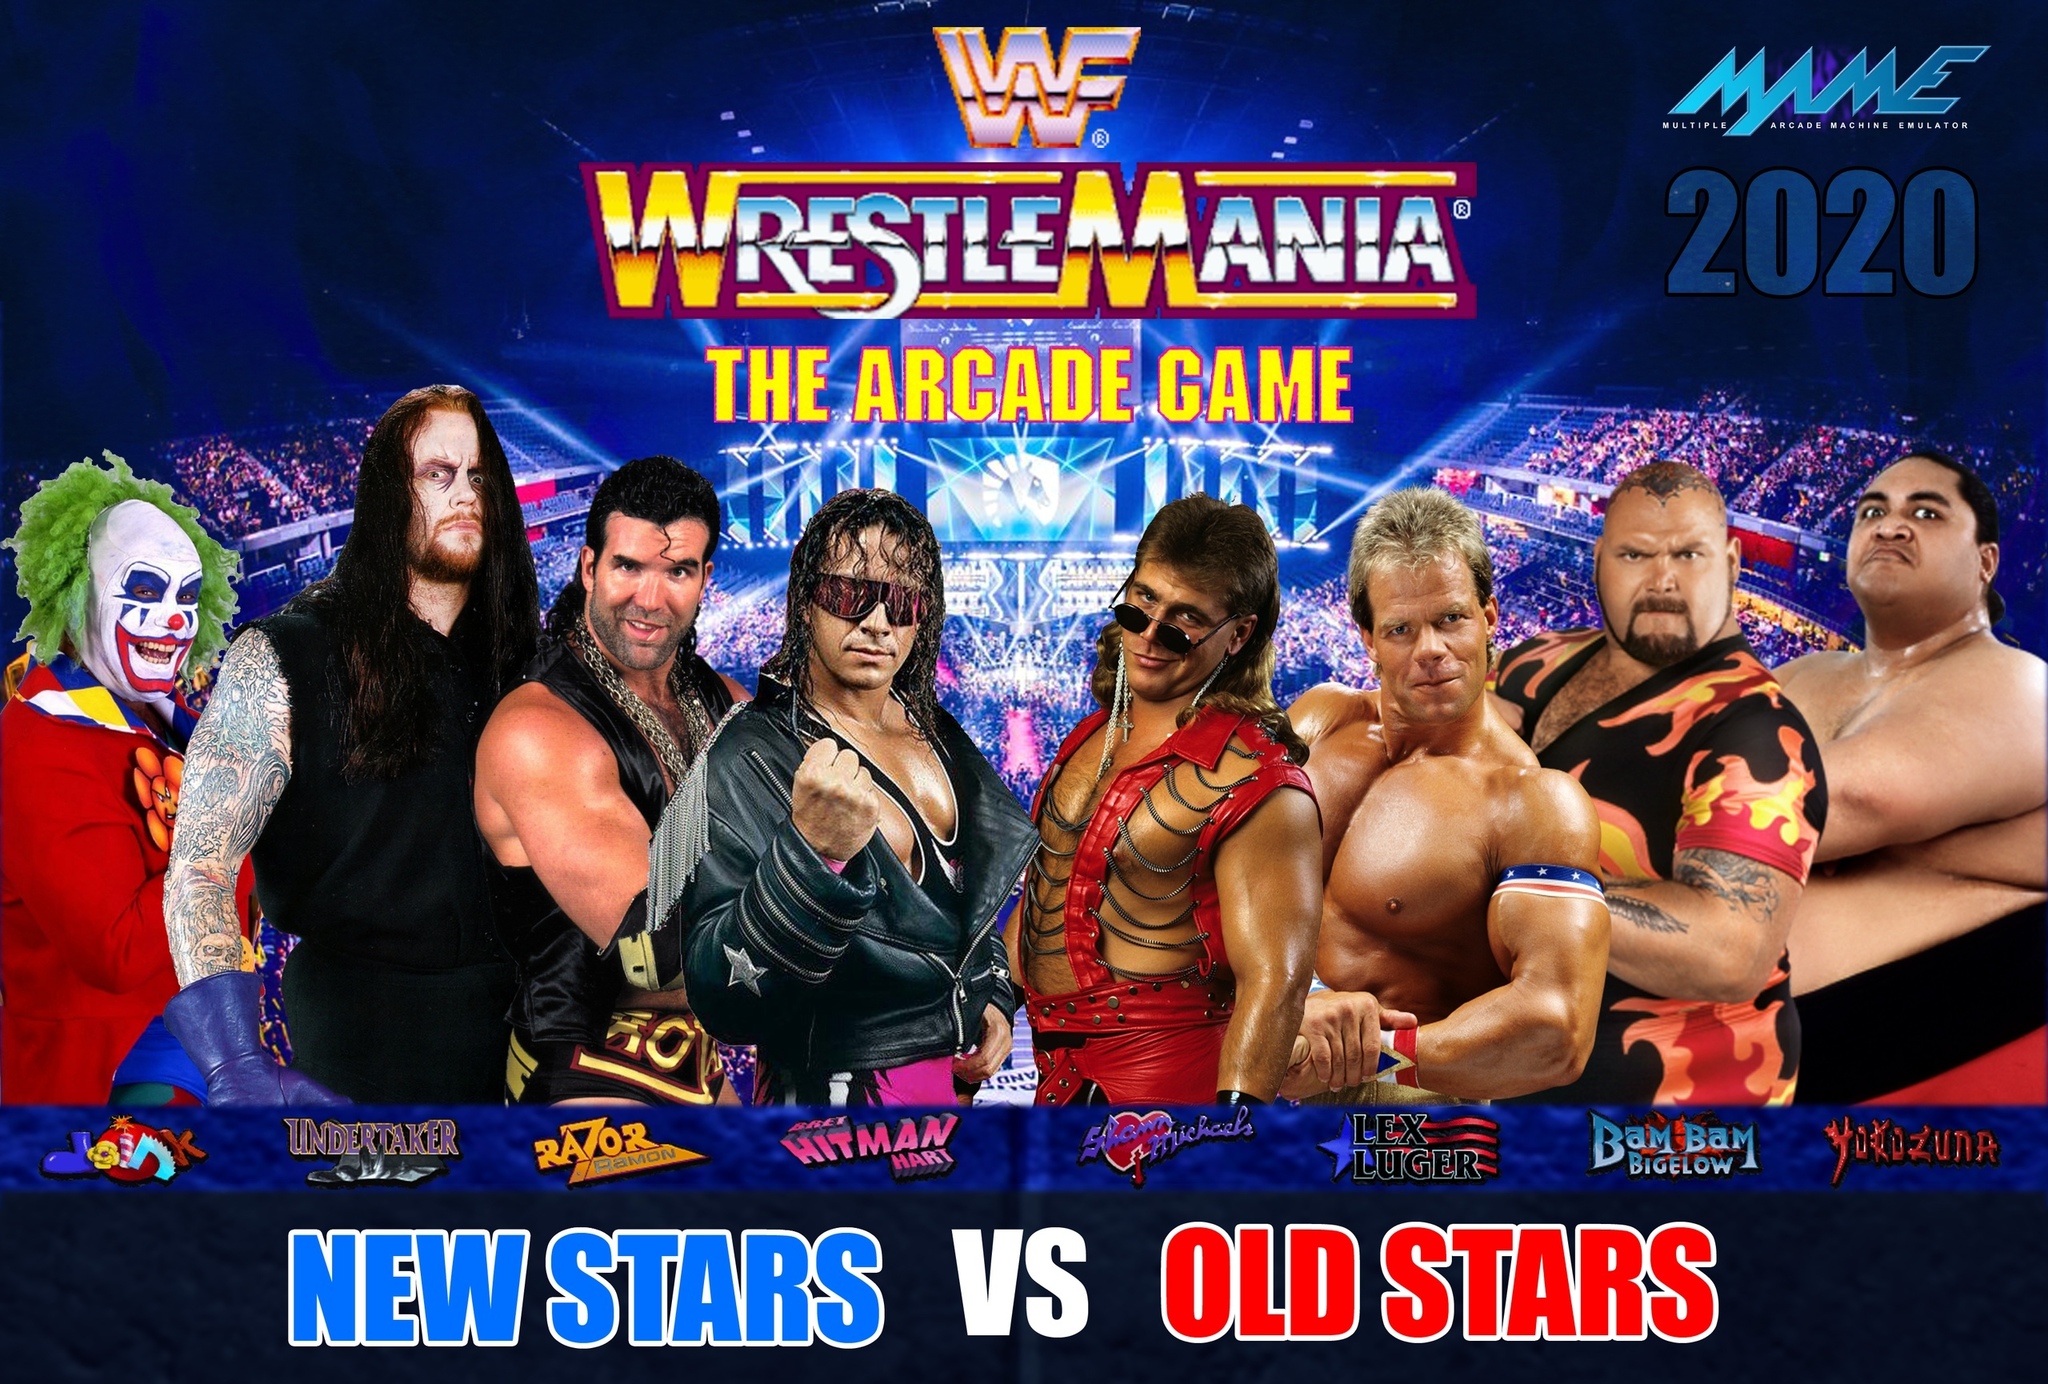 WWF WrestleMania Tournament: The Arcade Game - New Stars VS Old Stars - Wrestlemania, Retro Games, Online Games, Tournament, WWF